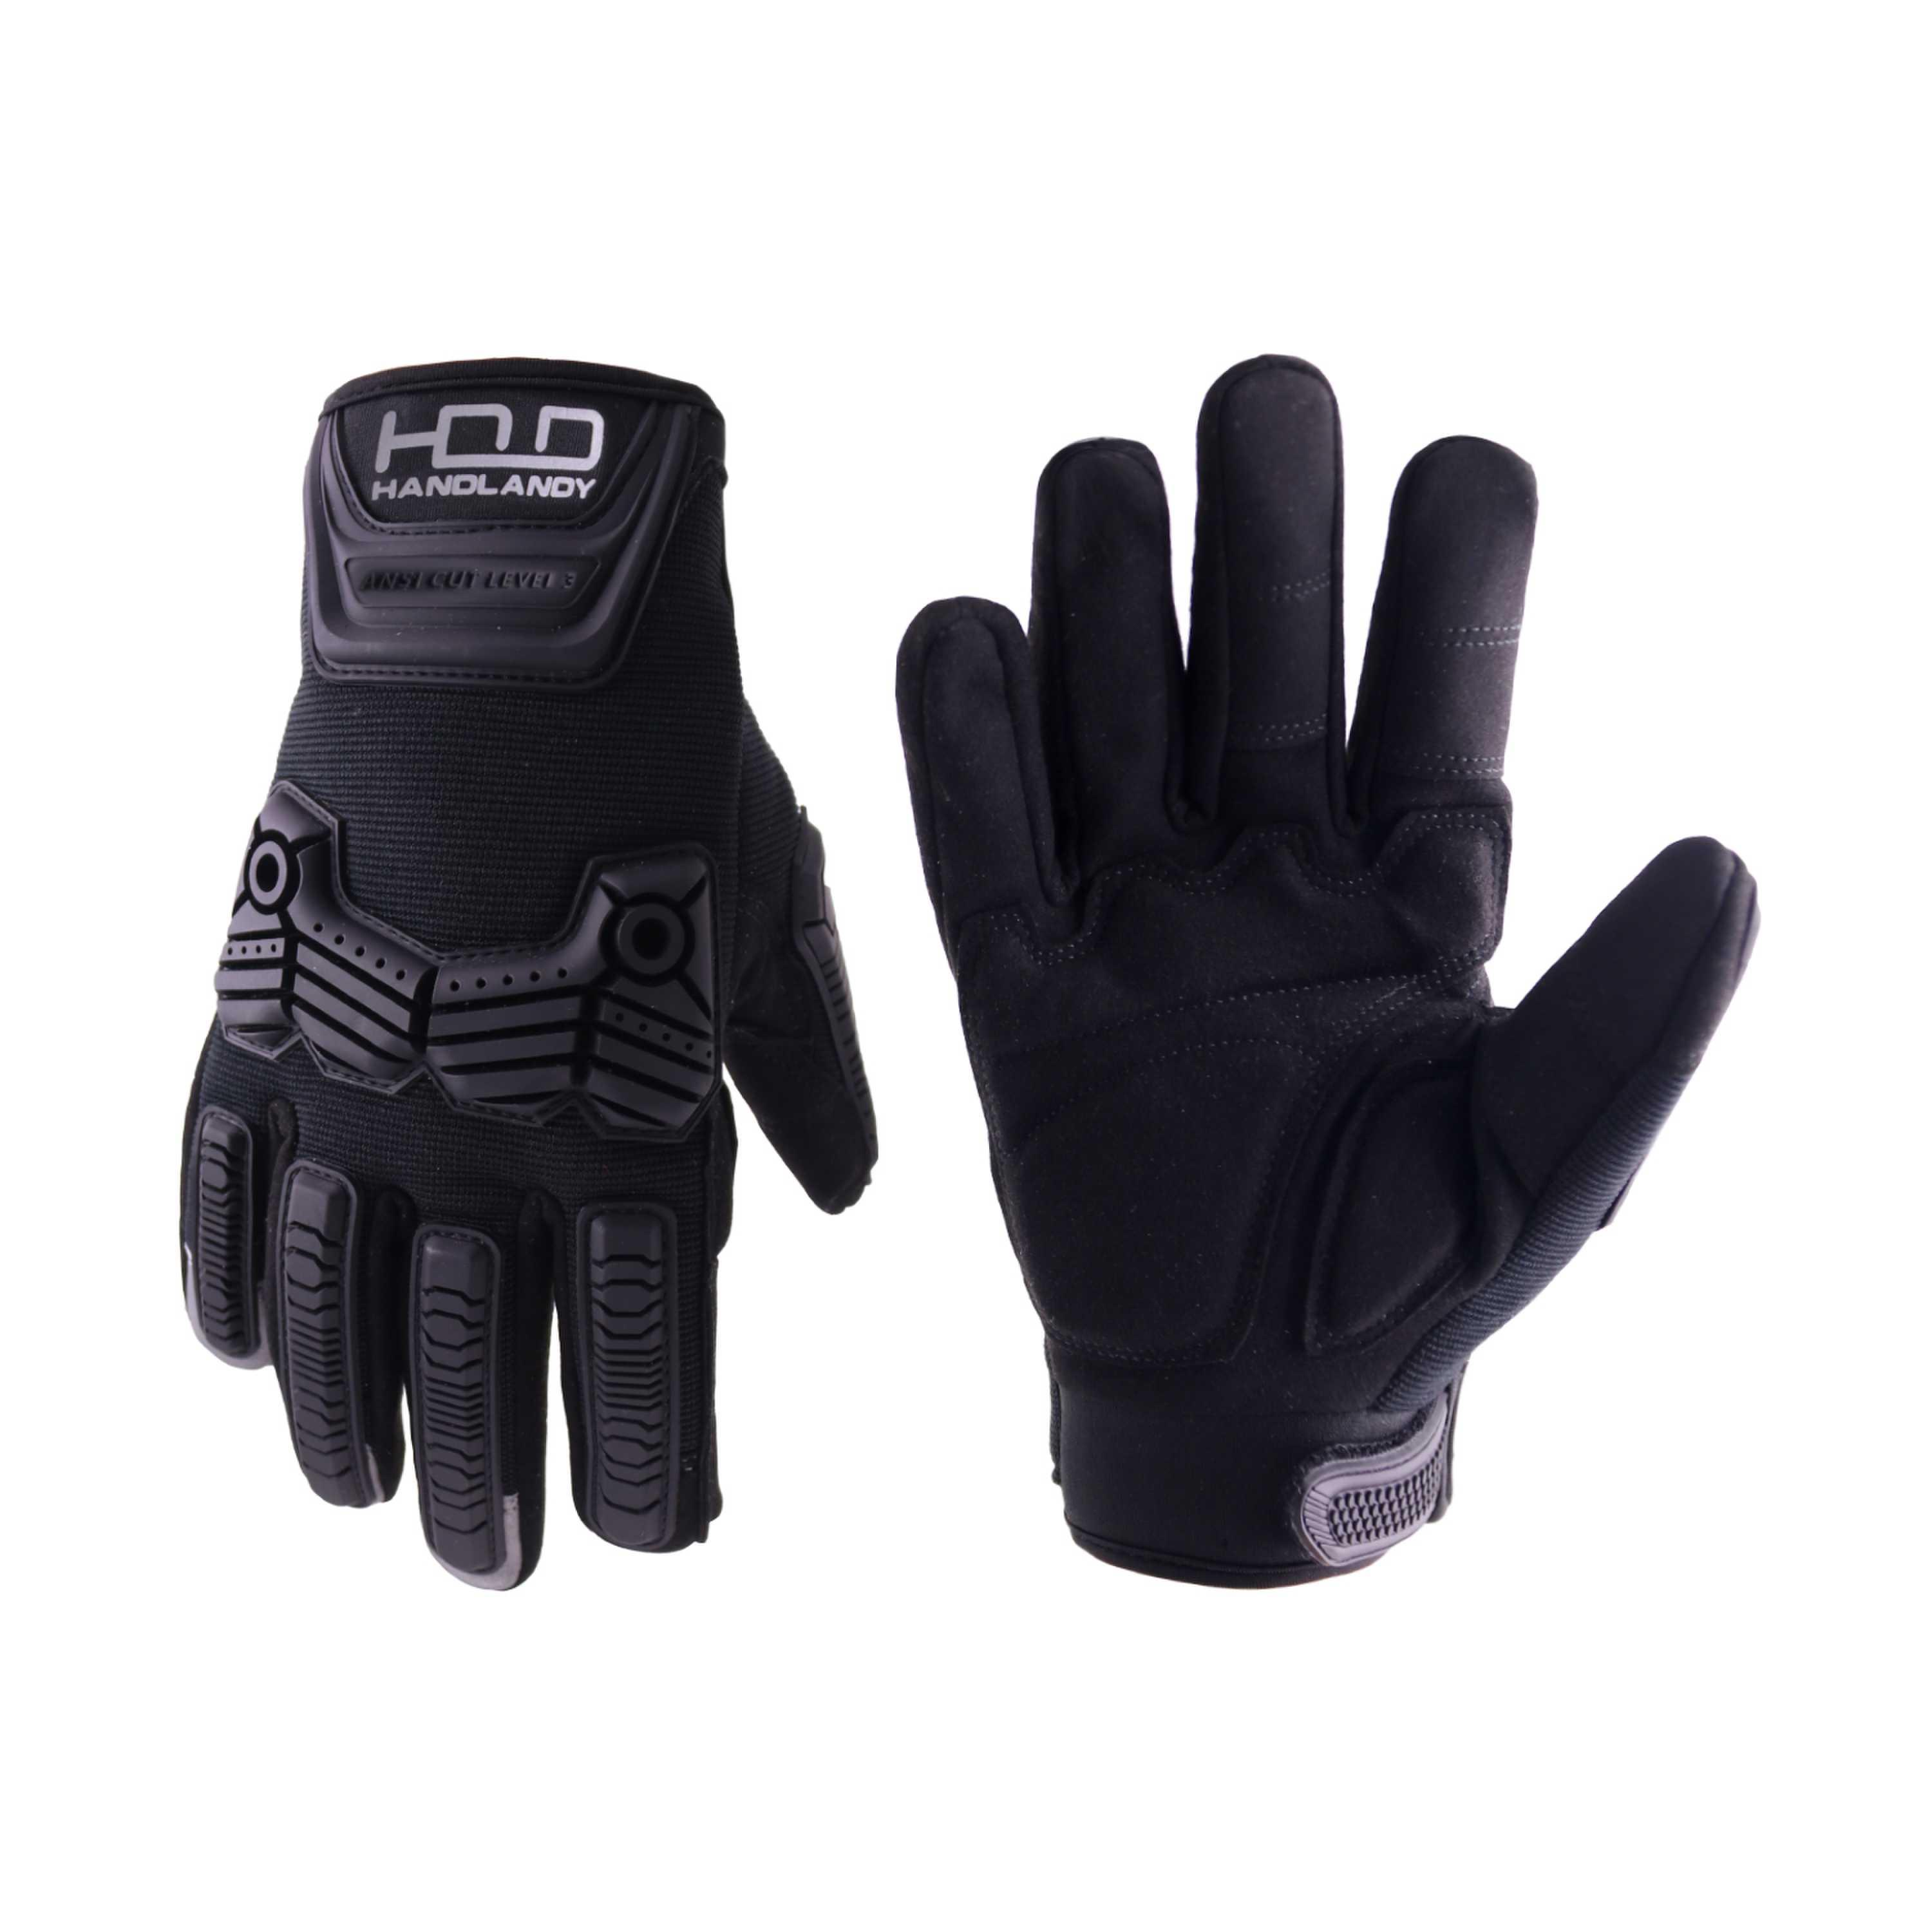 6216 PRI fashion black tactics Anti-Vibration TPR protector touch screen work safety mechanic gloves